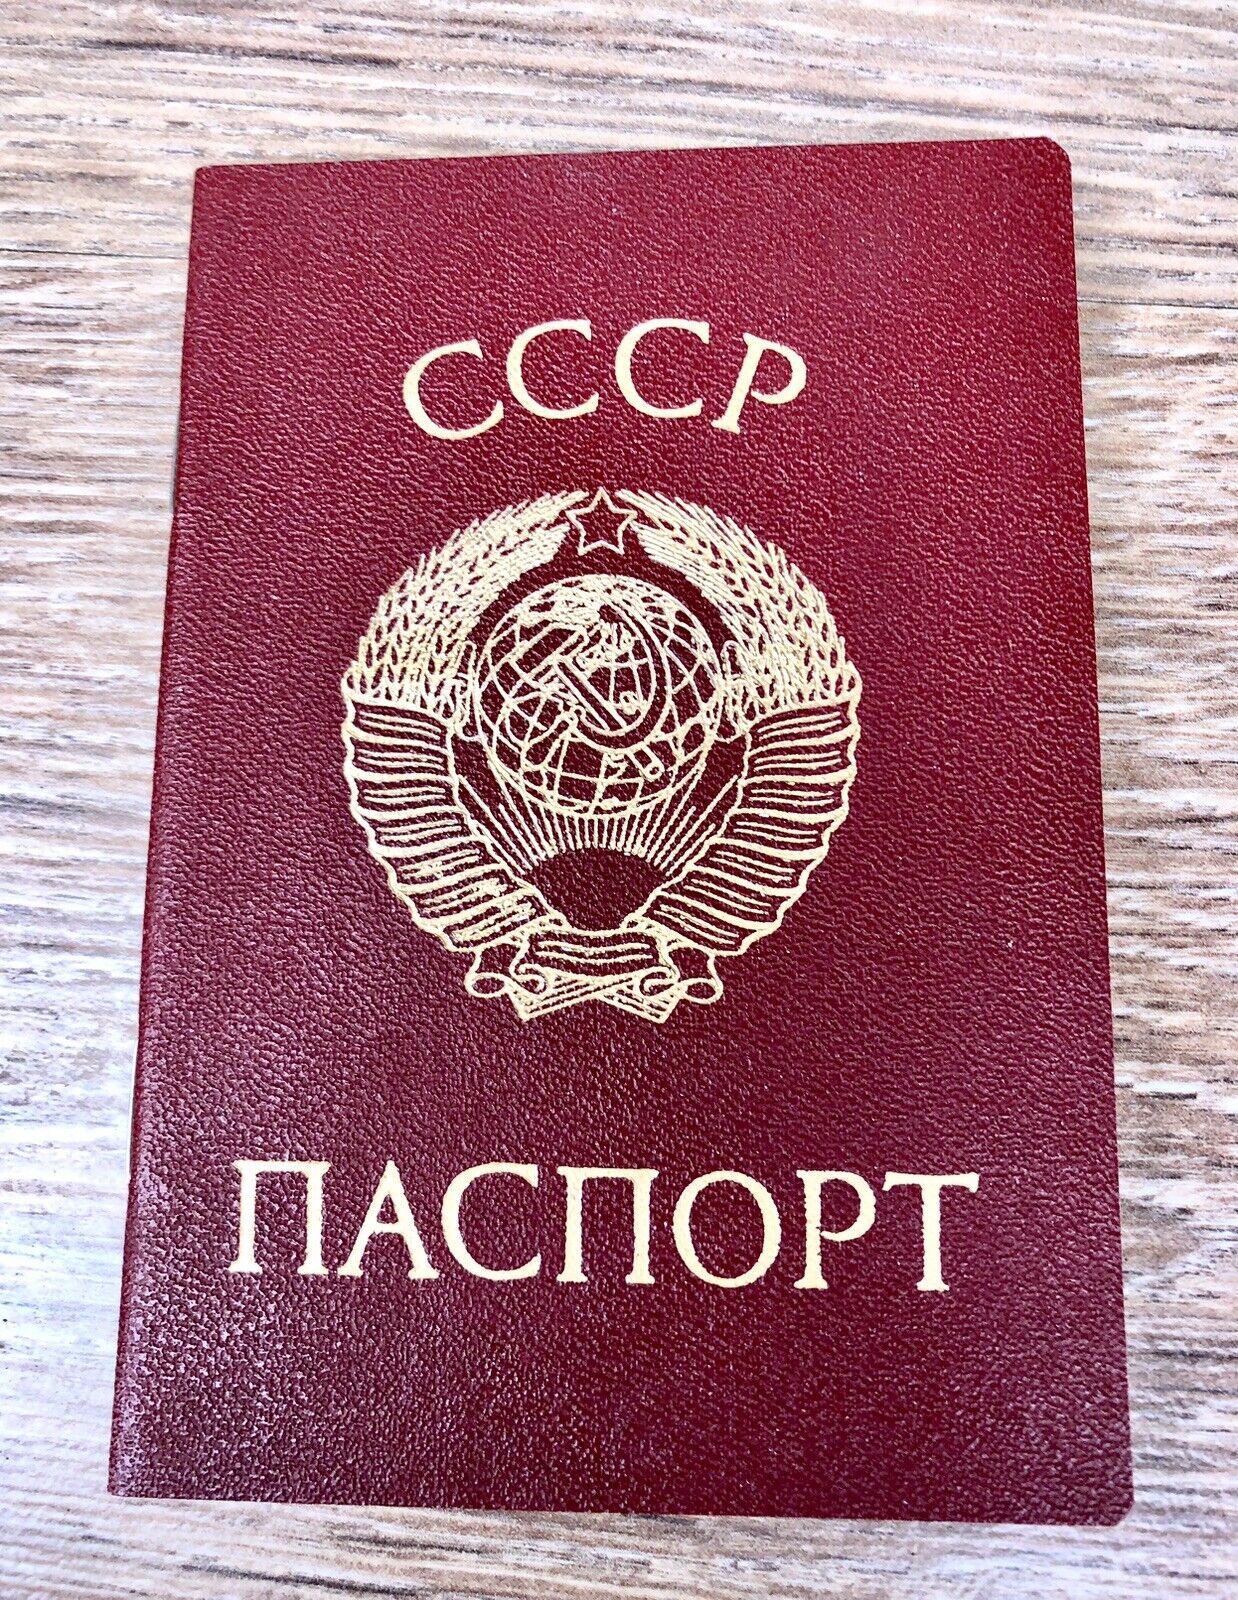 Old Soviet passport. Pure USSR. Original